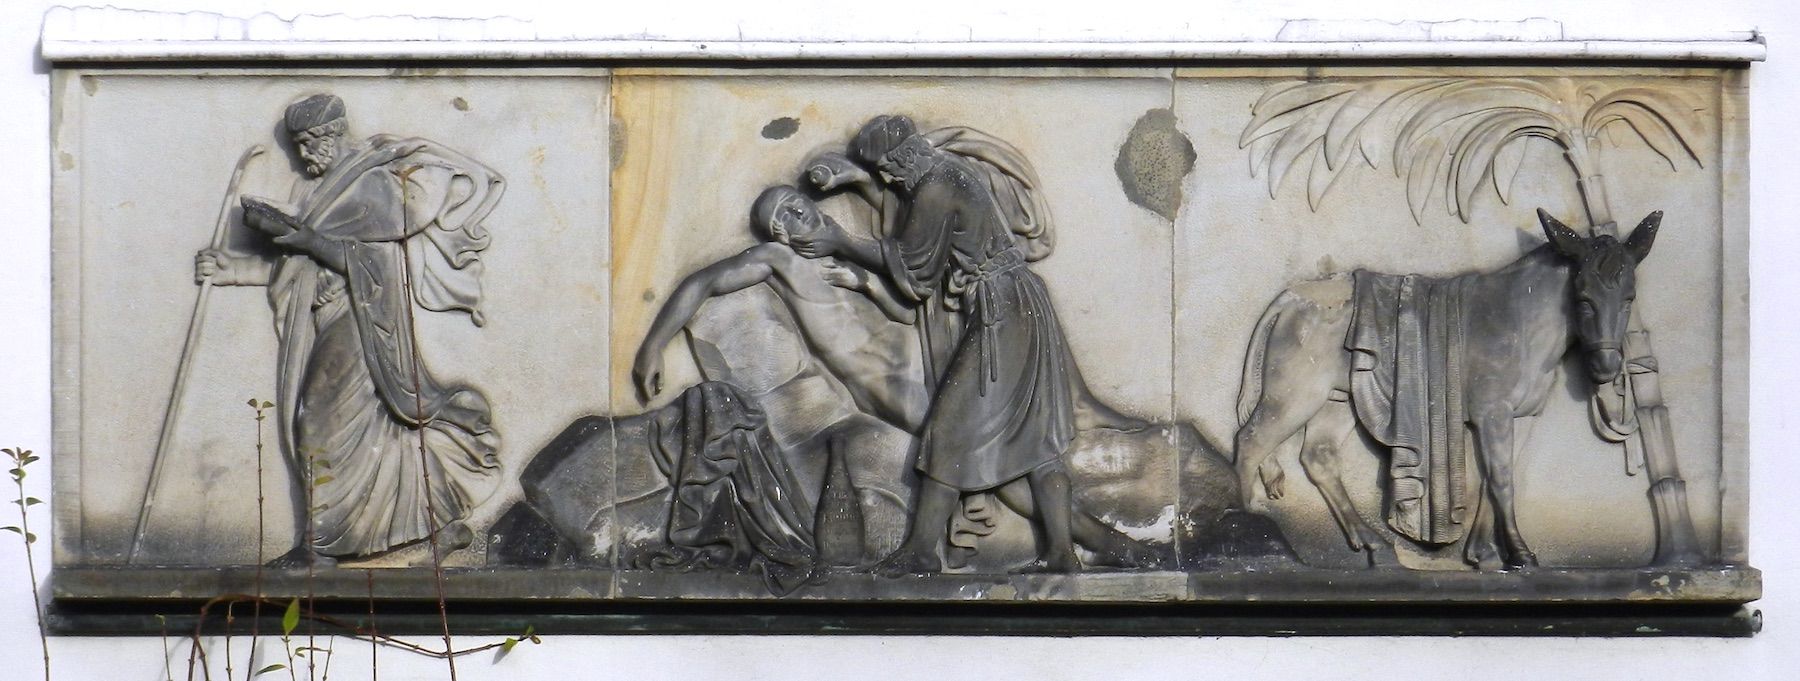 An 1833 sculpted relief of the Good Samaritan parable by Kümmel - фото 72369